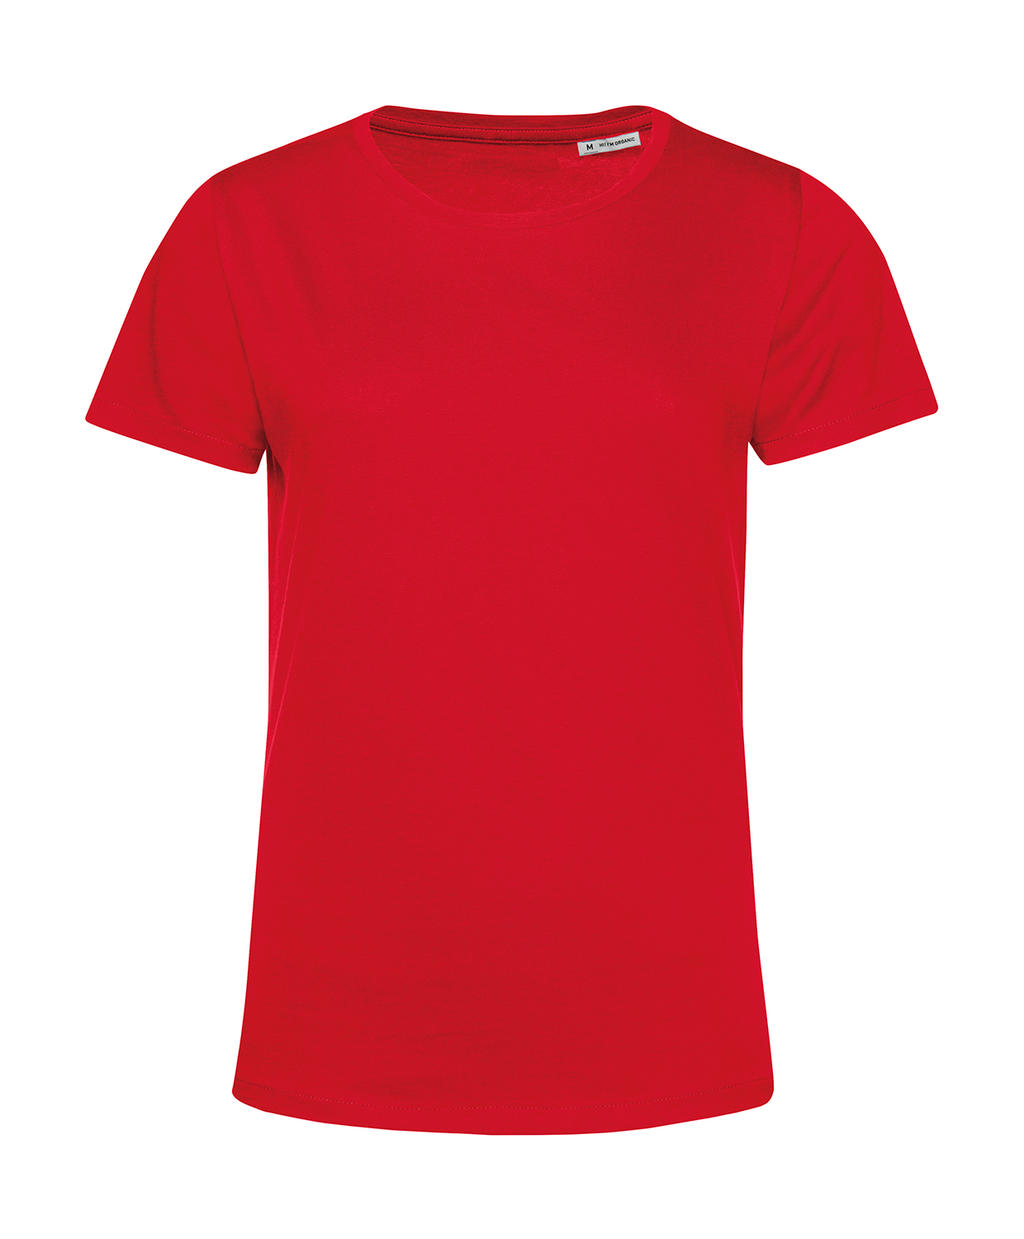 Tričko dámské BC Organic Inspire E150 - červené, M